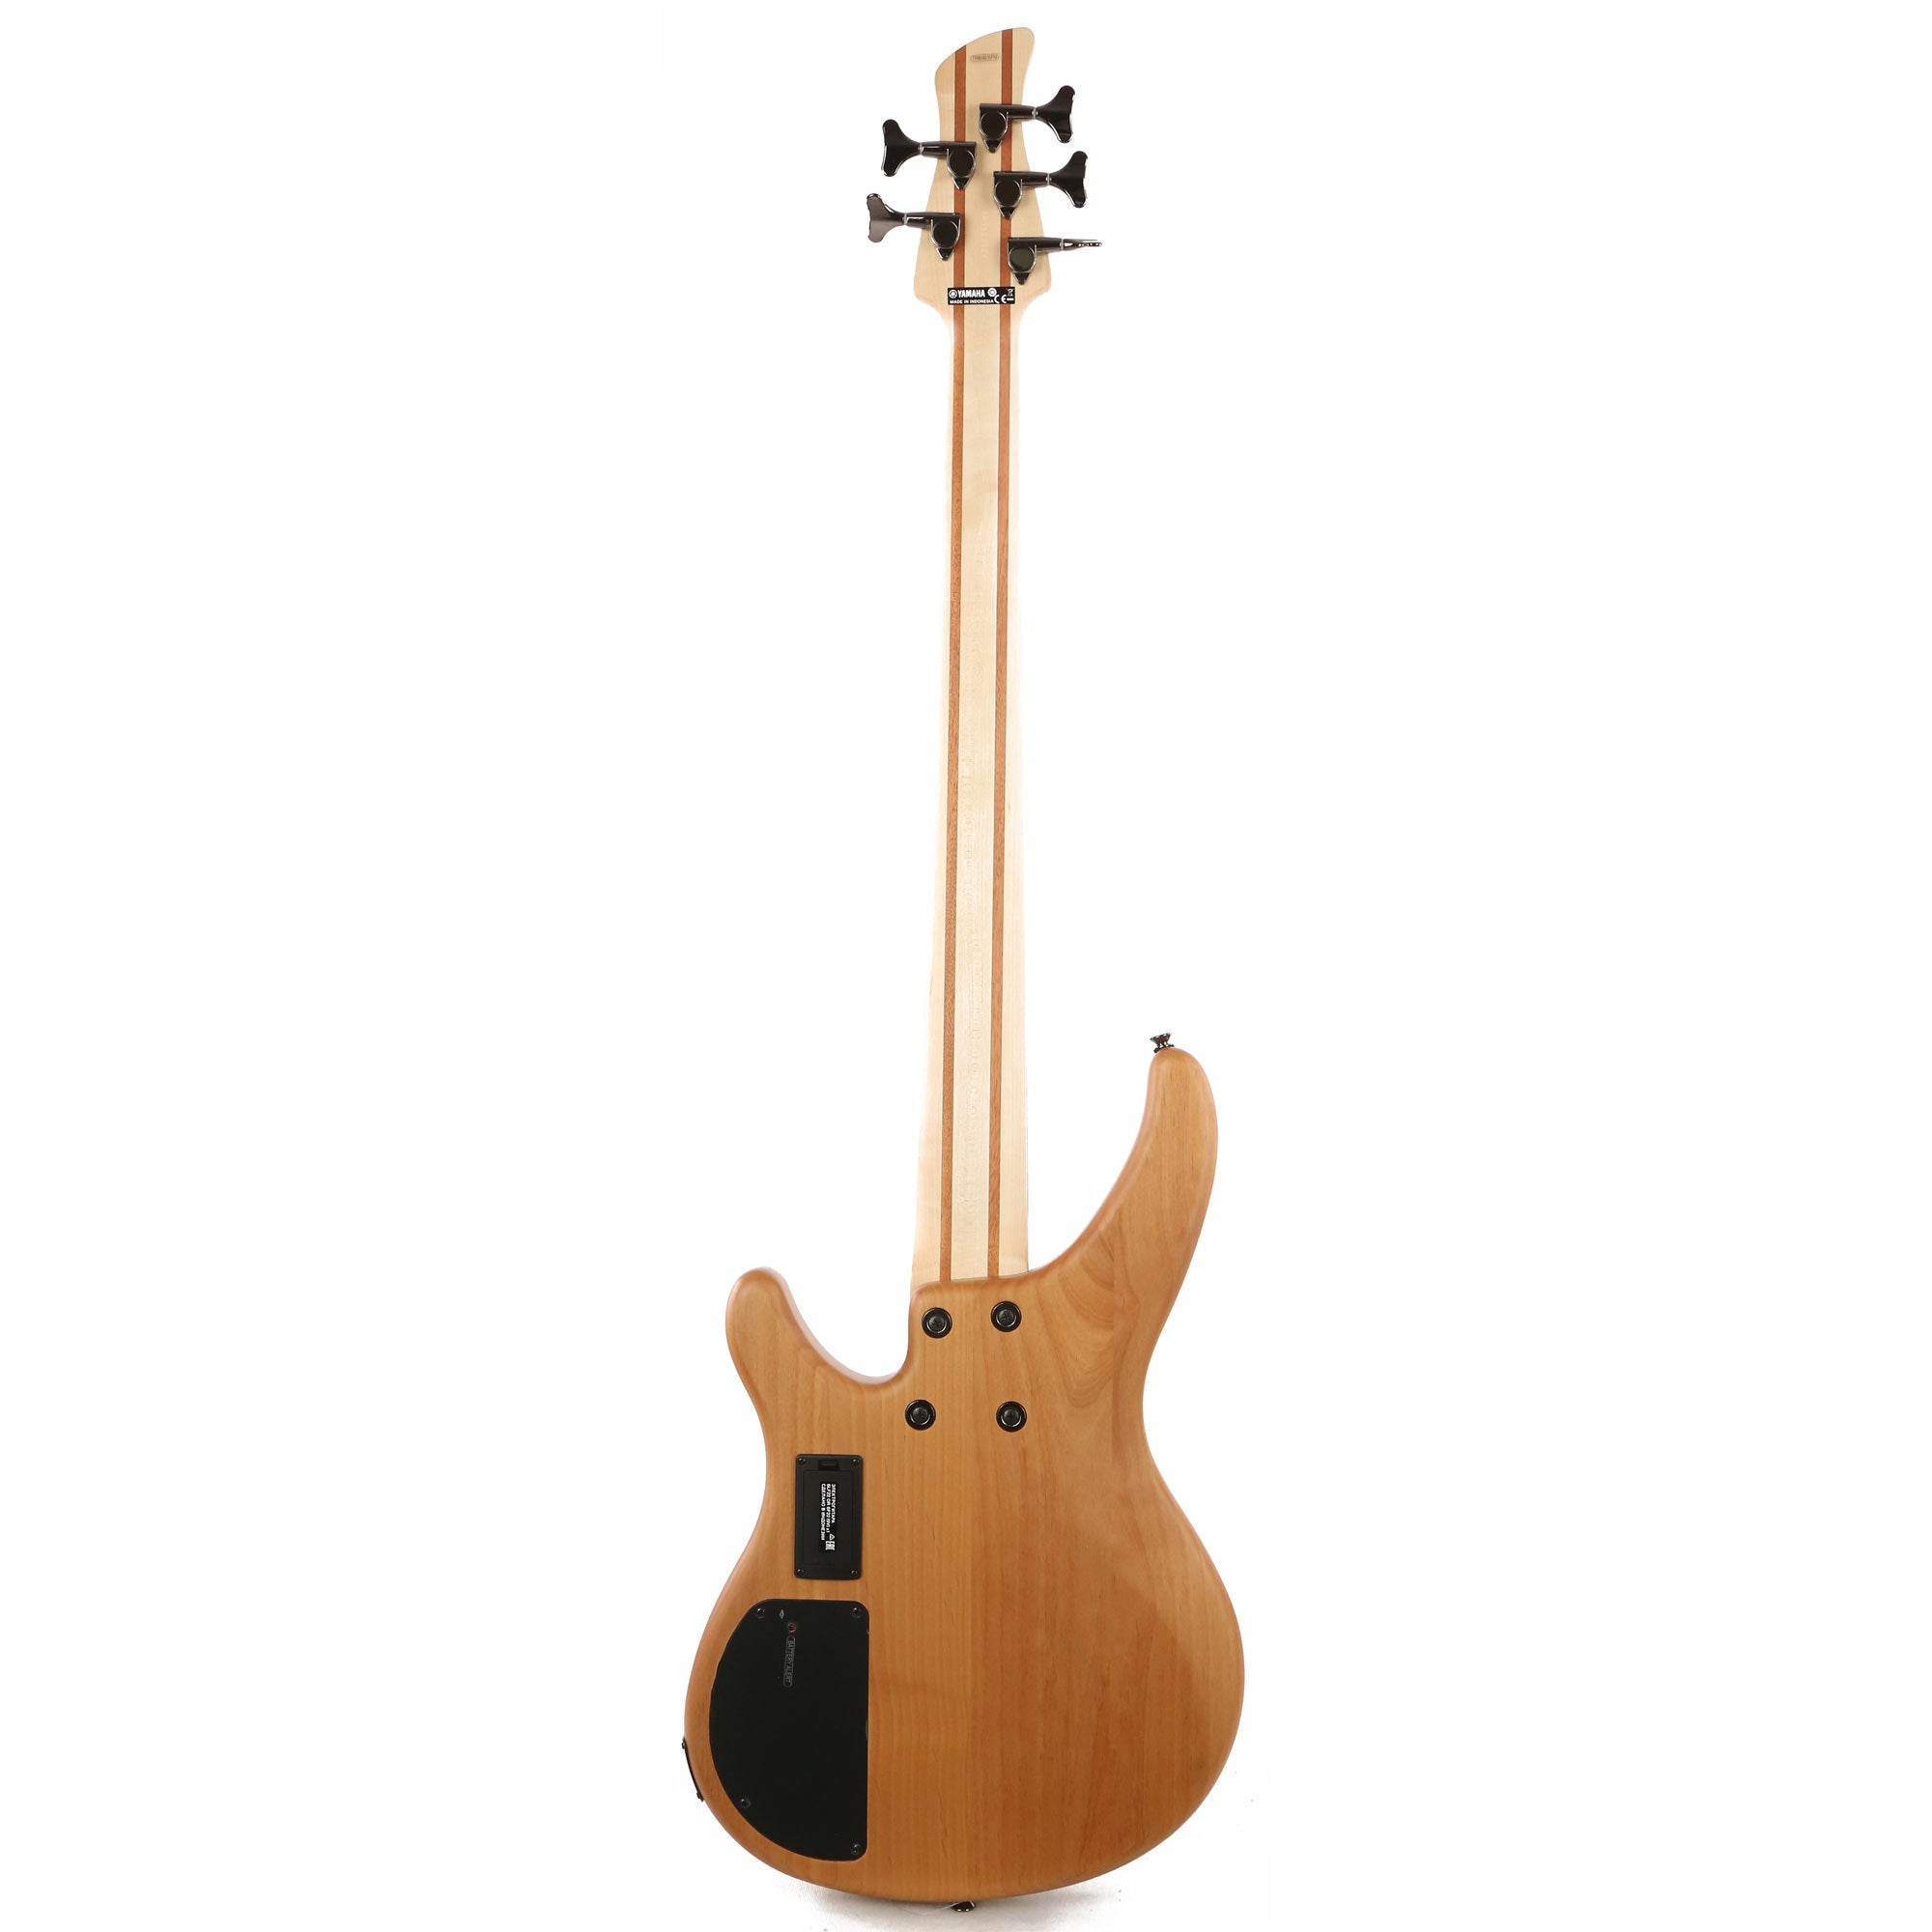 Yamaha TRBX605FM 5-String Electric Bass Guitar Natural | The Music Zoo